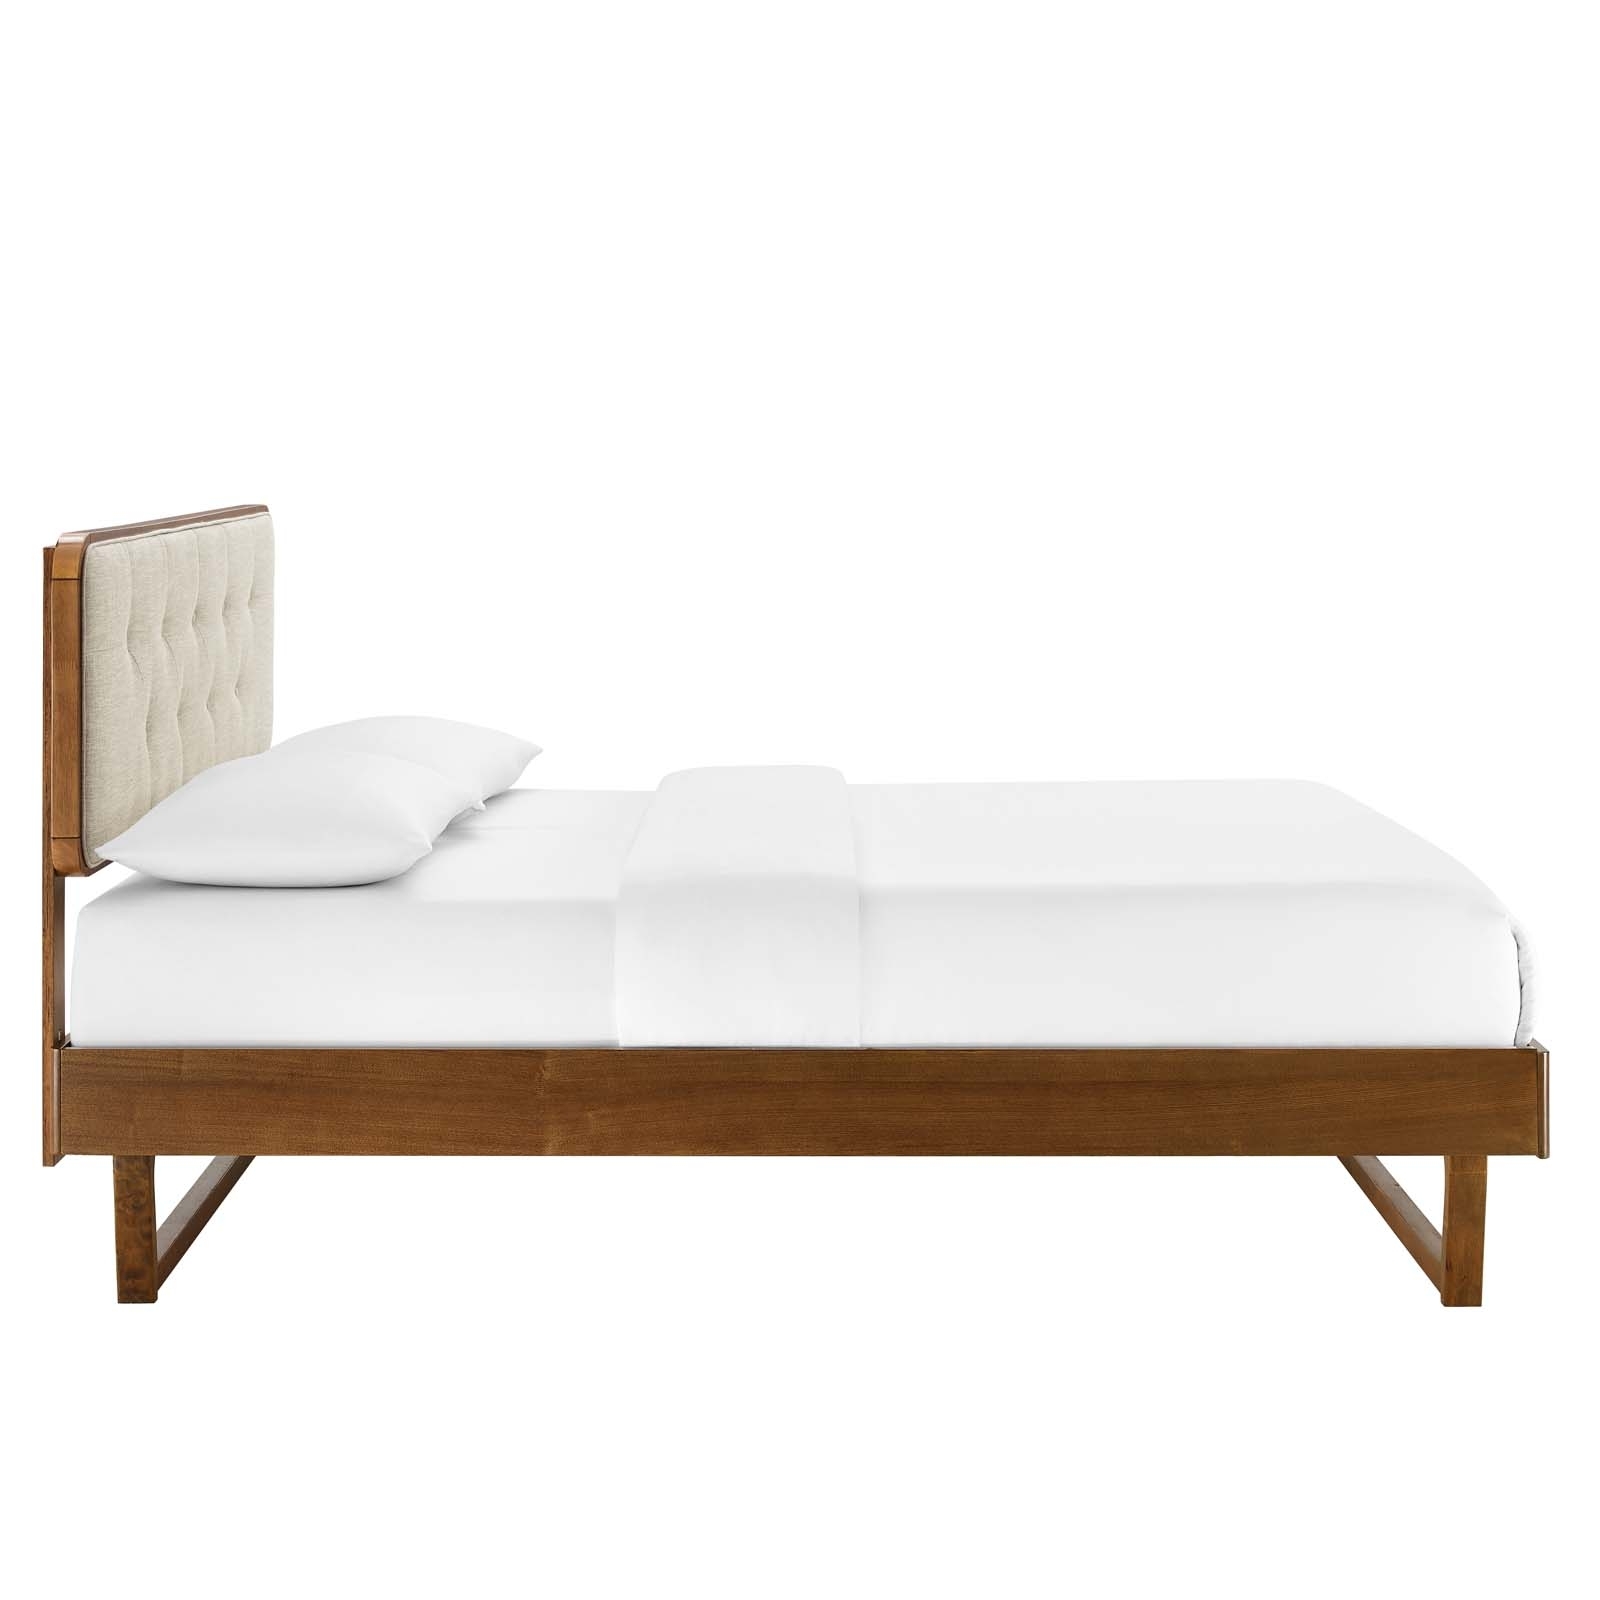 Bridgette Full Wood Platform Bed With Angular Frame, Walnut Beige